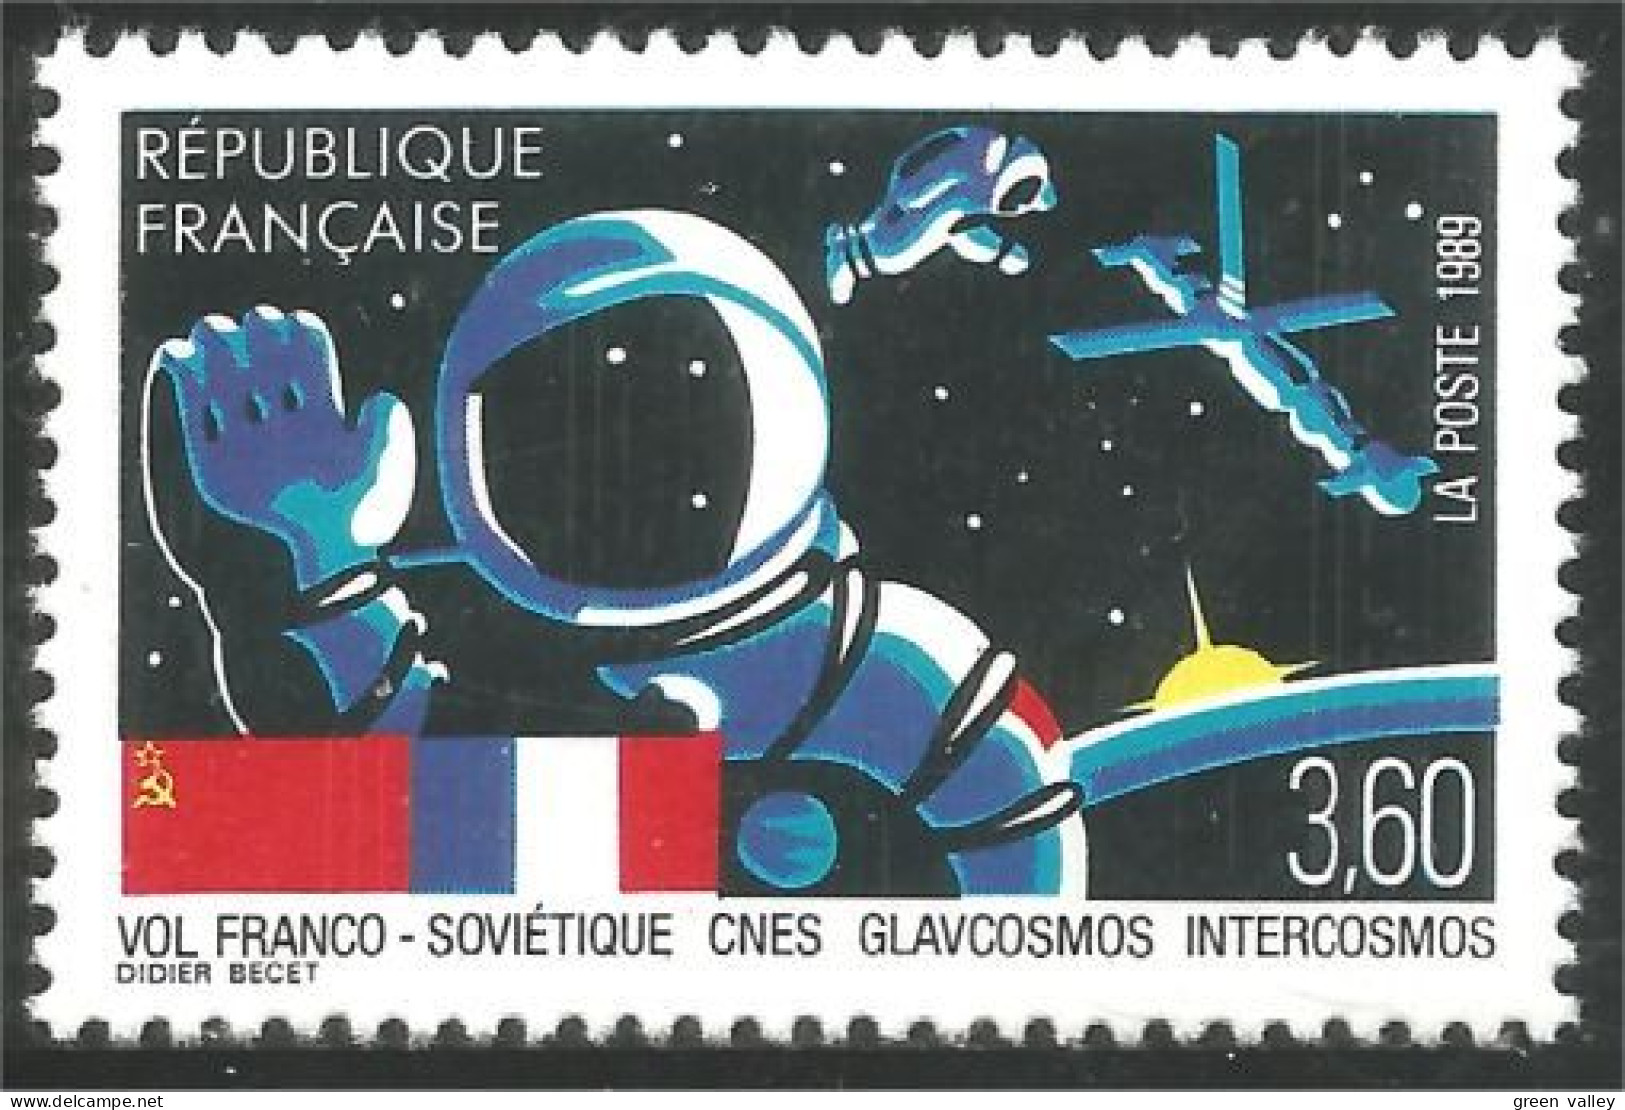 355 France Yv 2571 Espace Space Cosmonaute Cosmonaut Drapeau Flag MNH ** Neuf SC (2571-1b) - Stamps